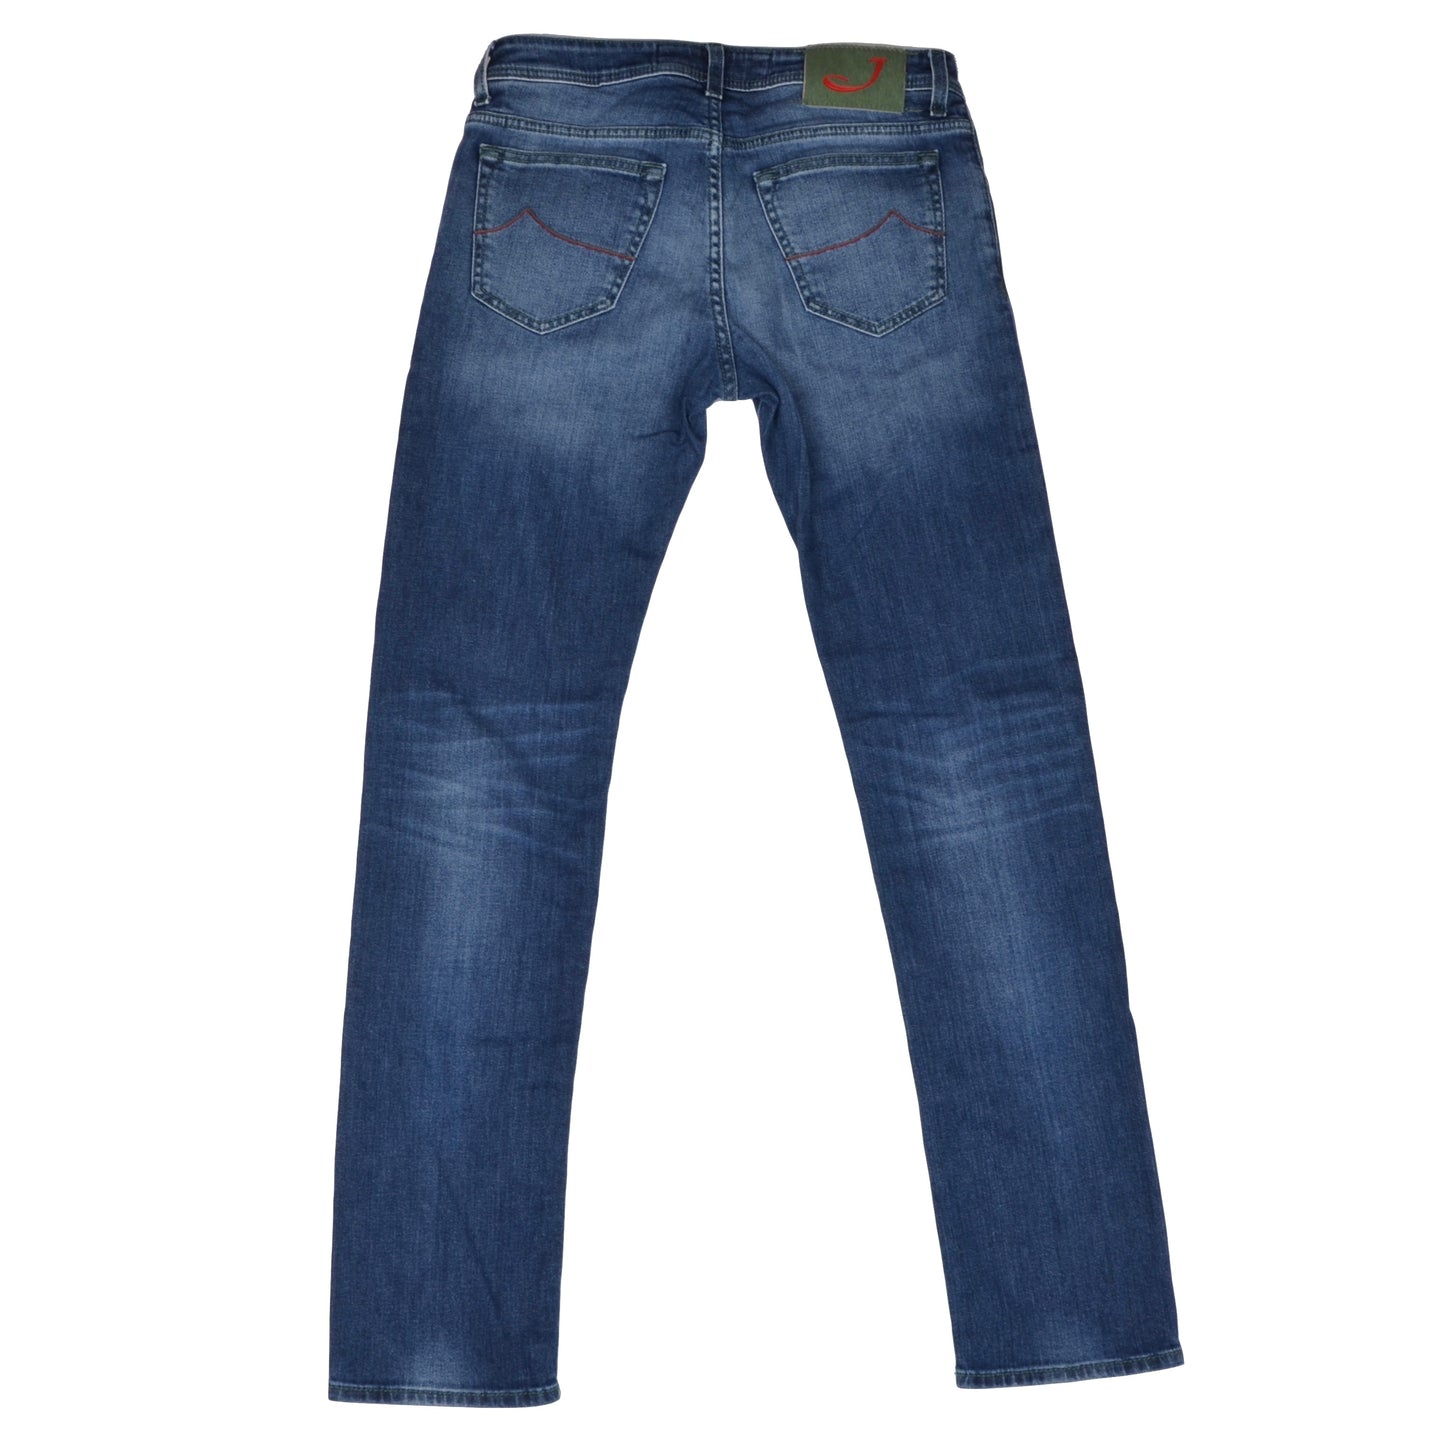 Jacob Cohen Jeans Modell 688 Größe W31 Slim